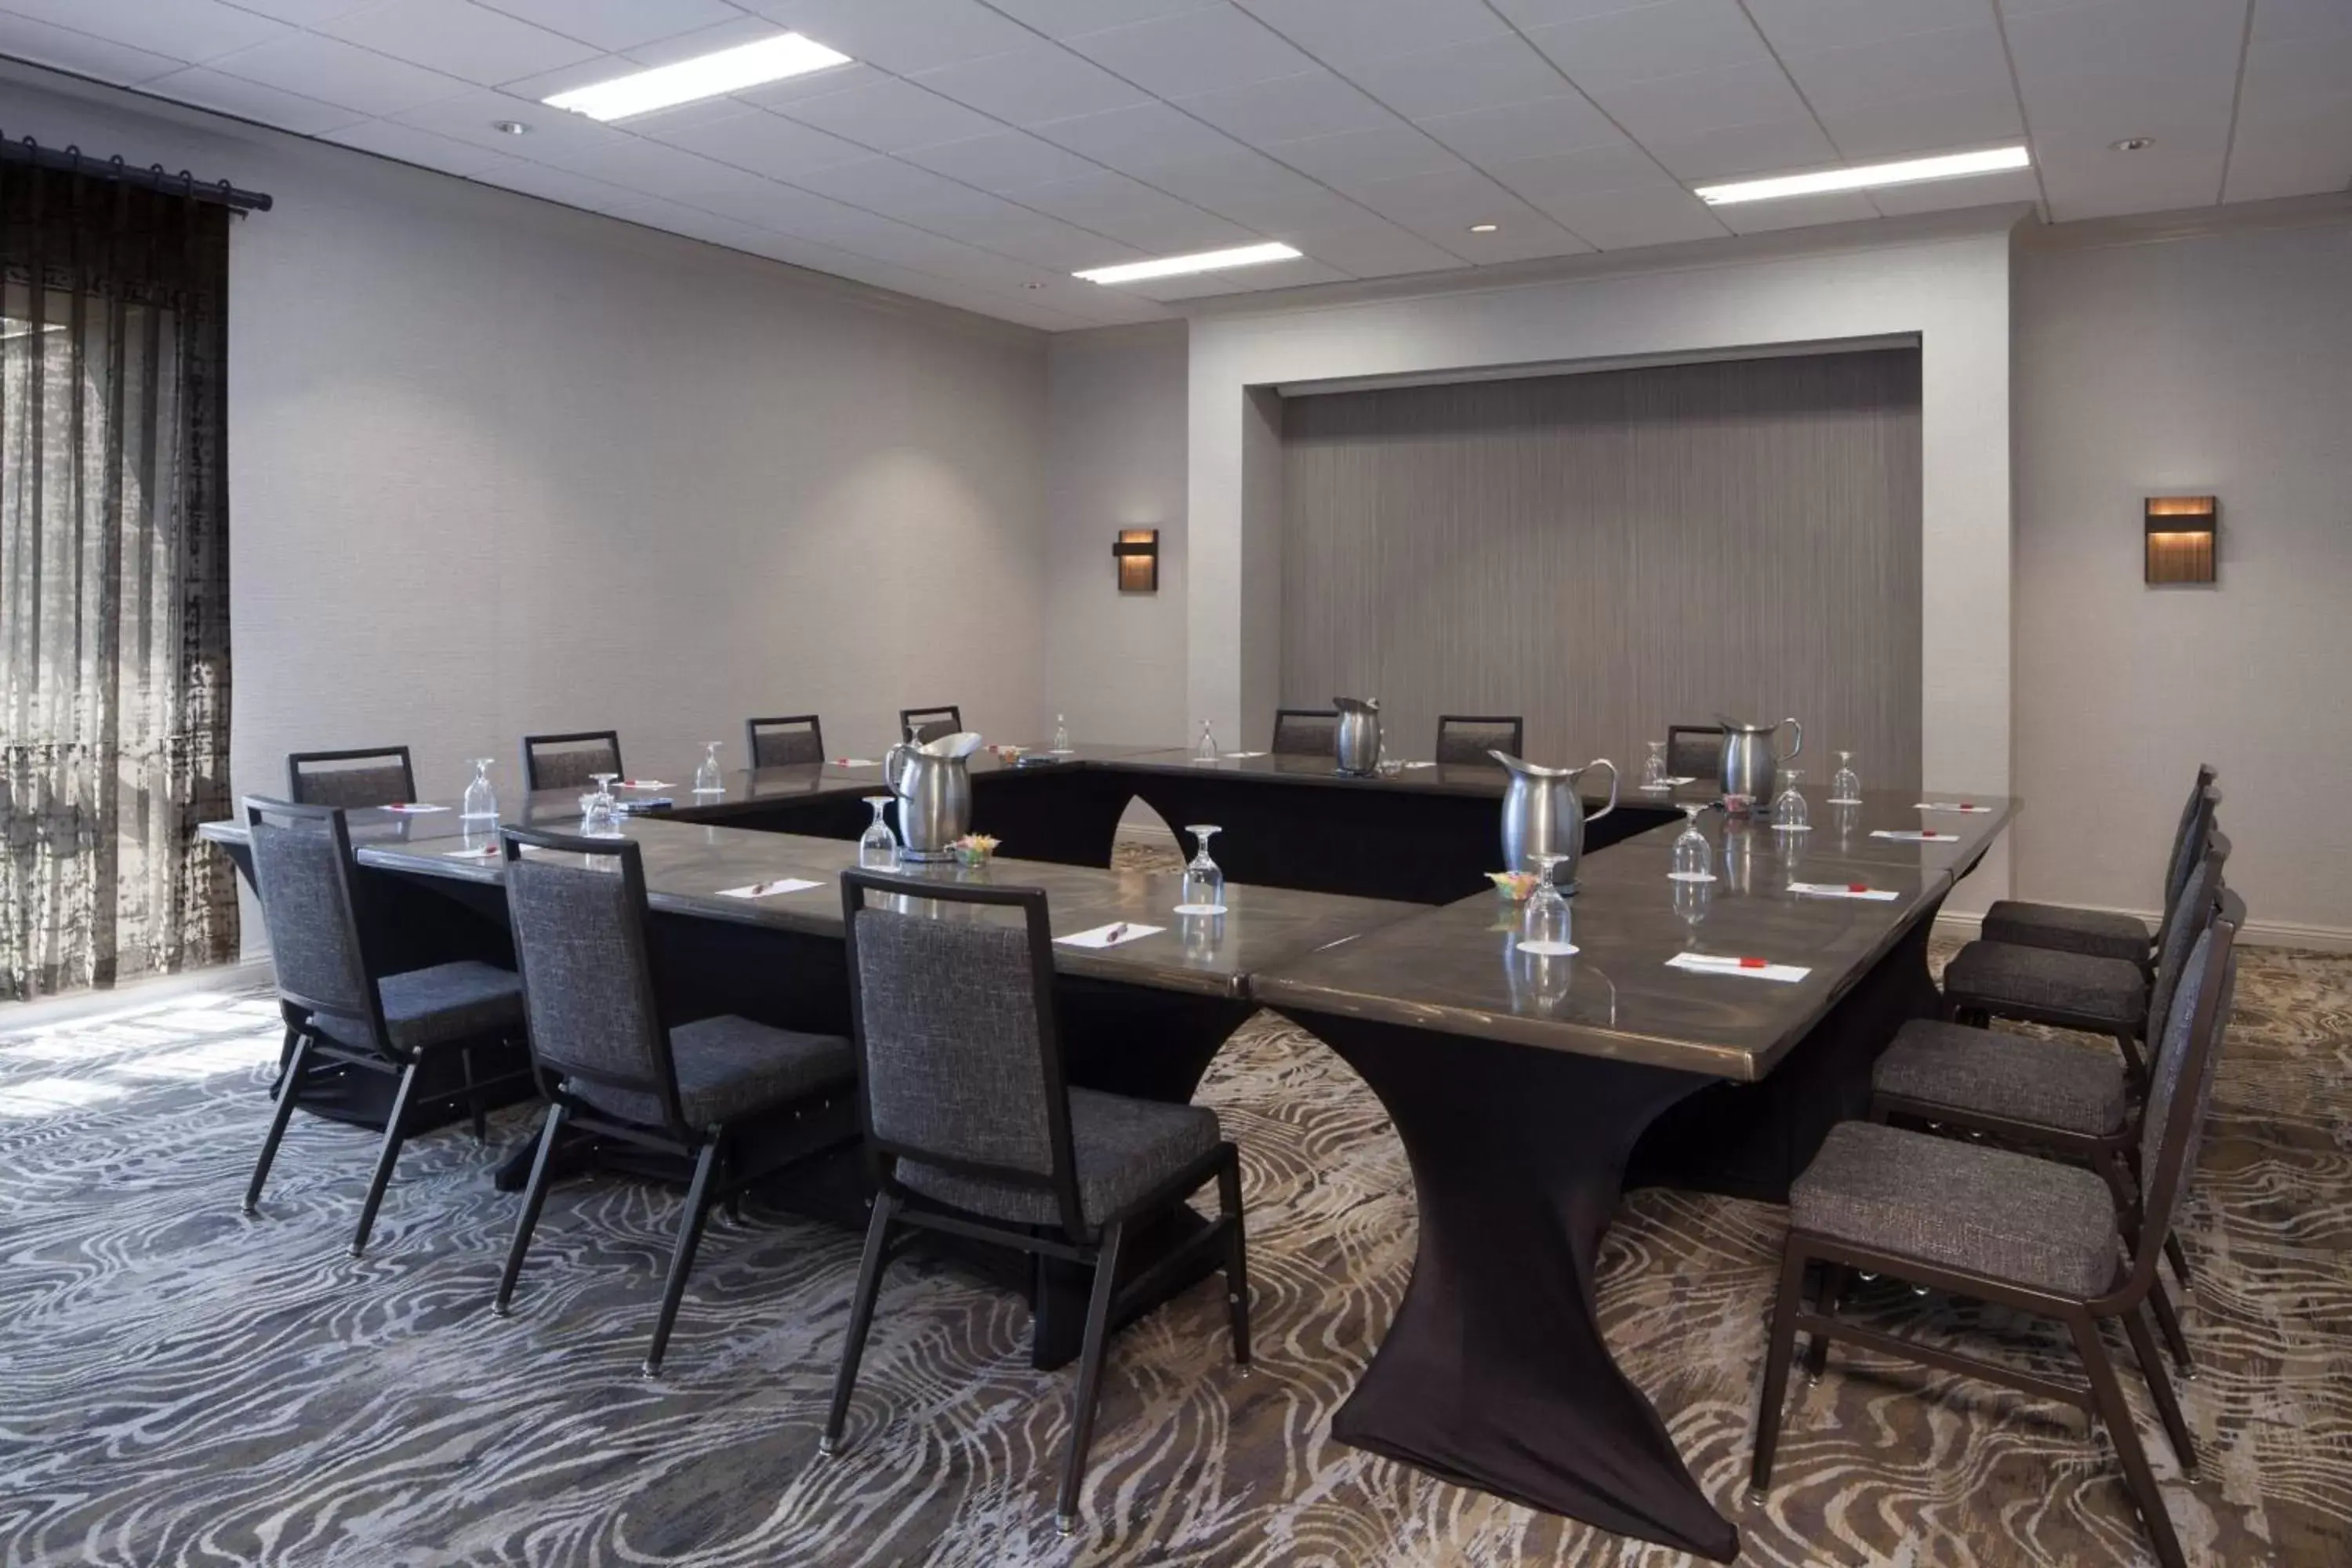 Meeting/conference room in Omaha Marriott